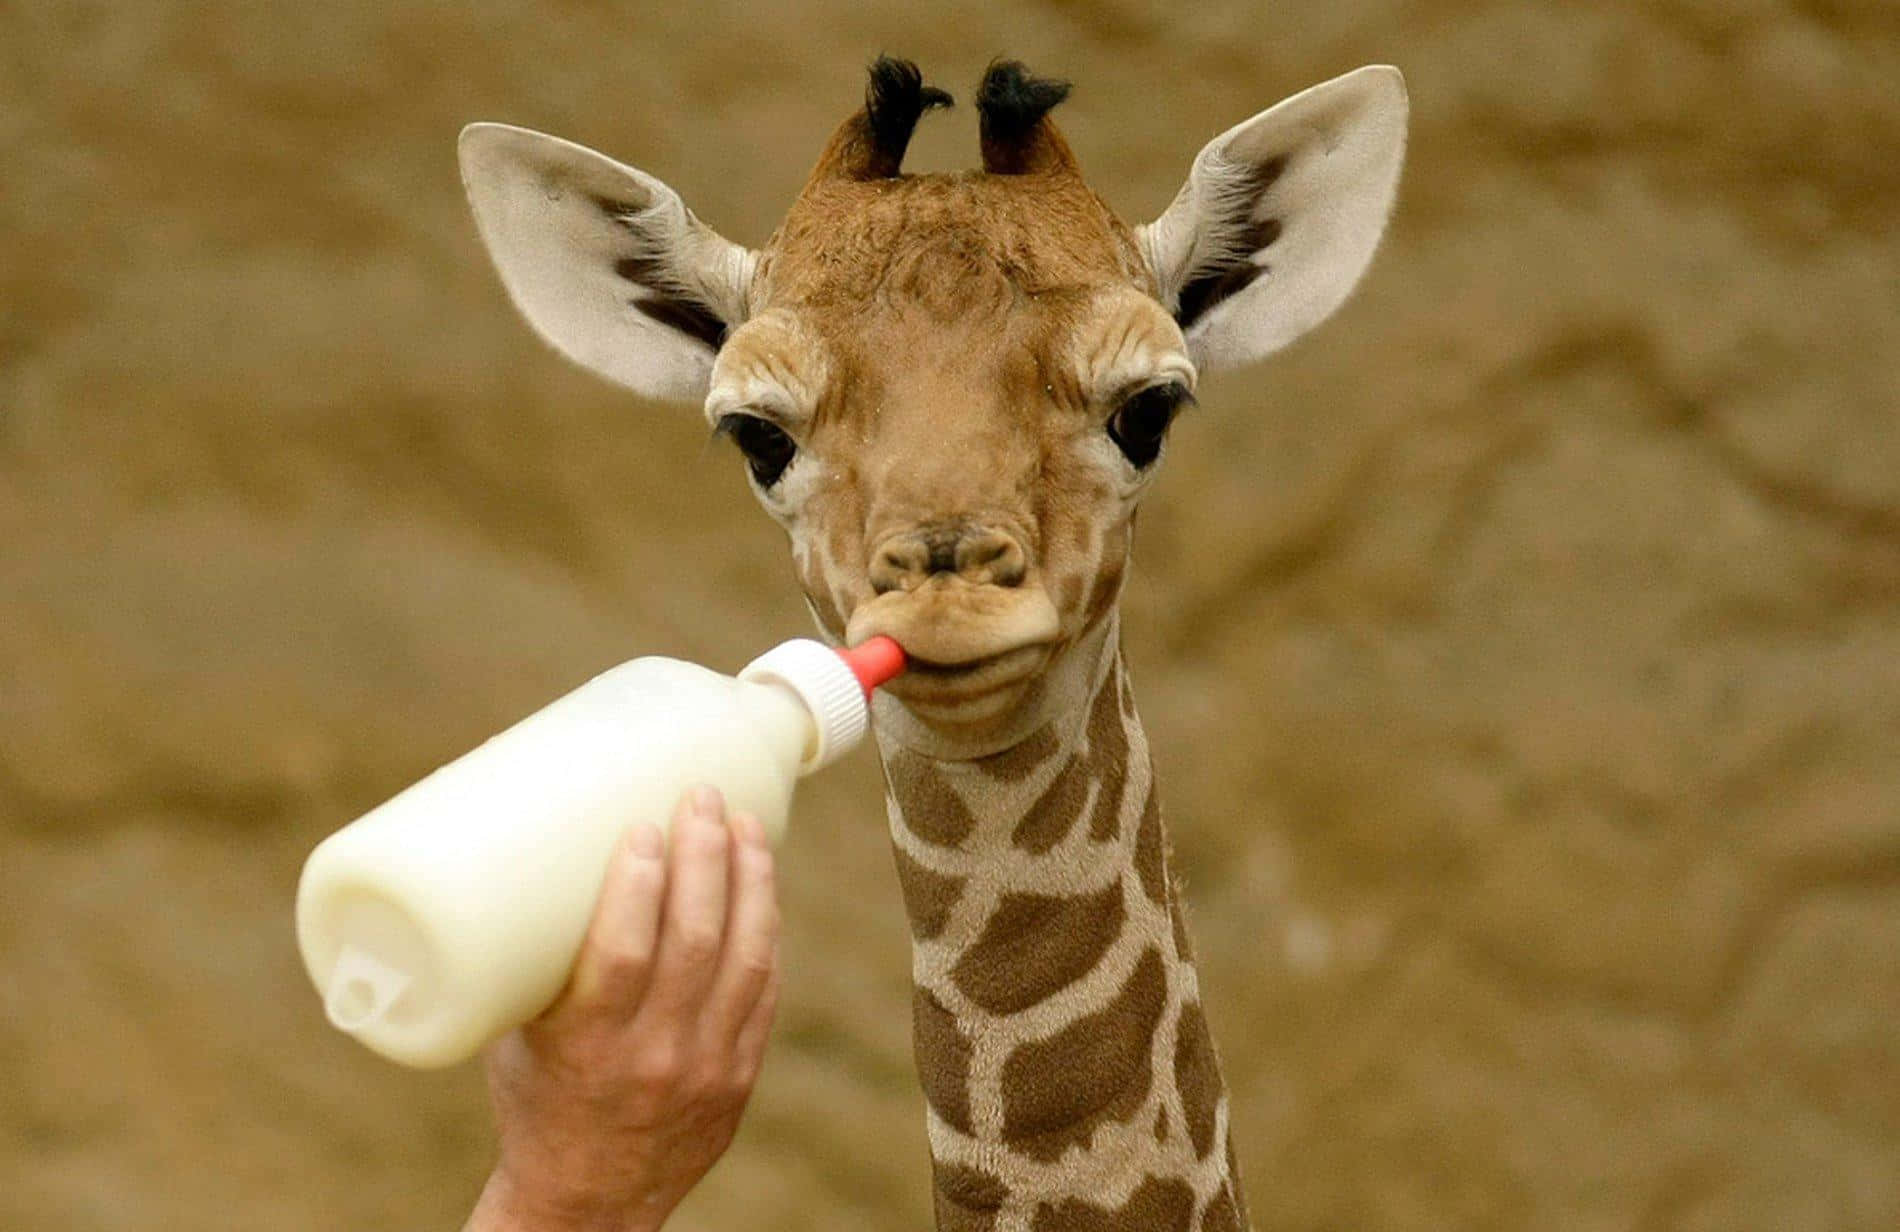 Welcome to the World, Little Giraffe!